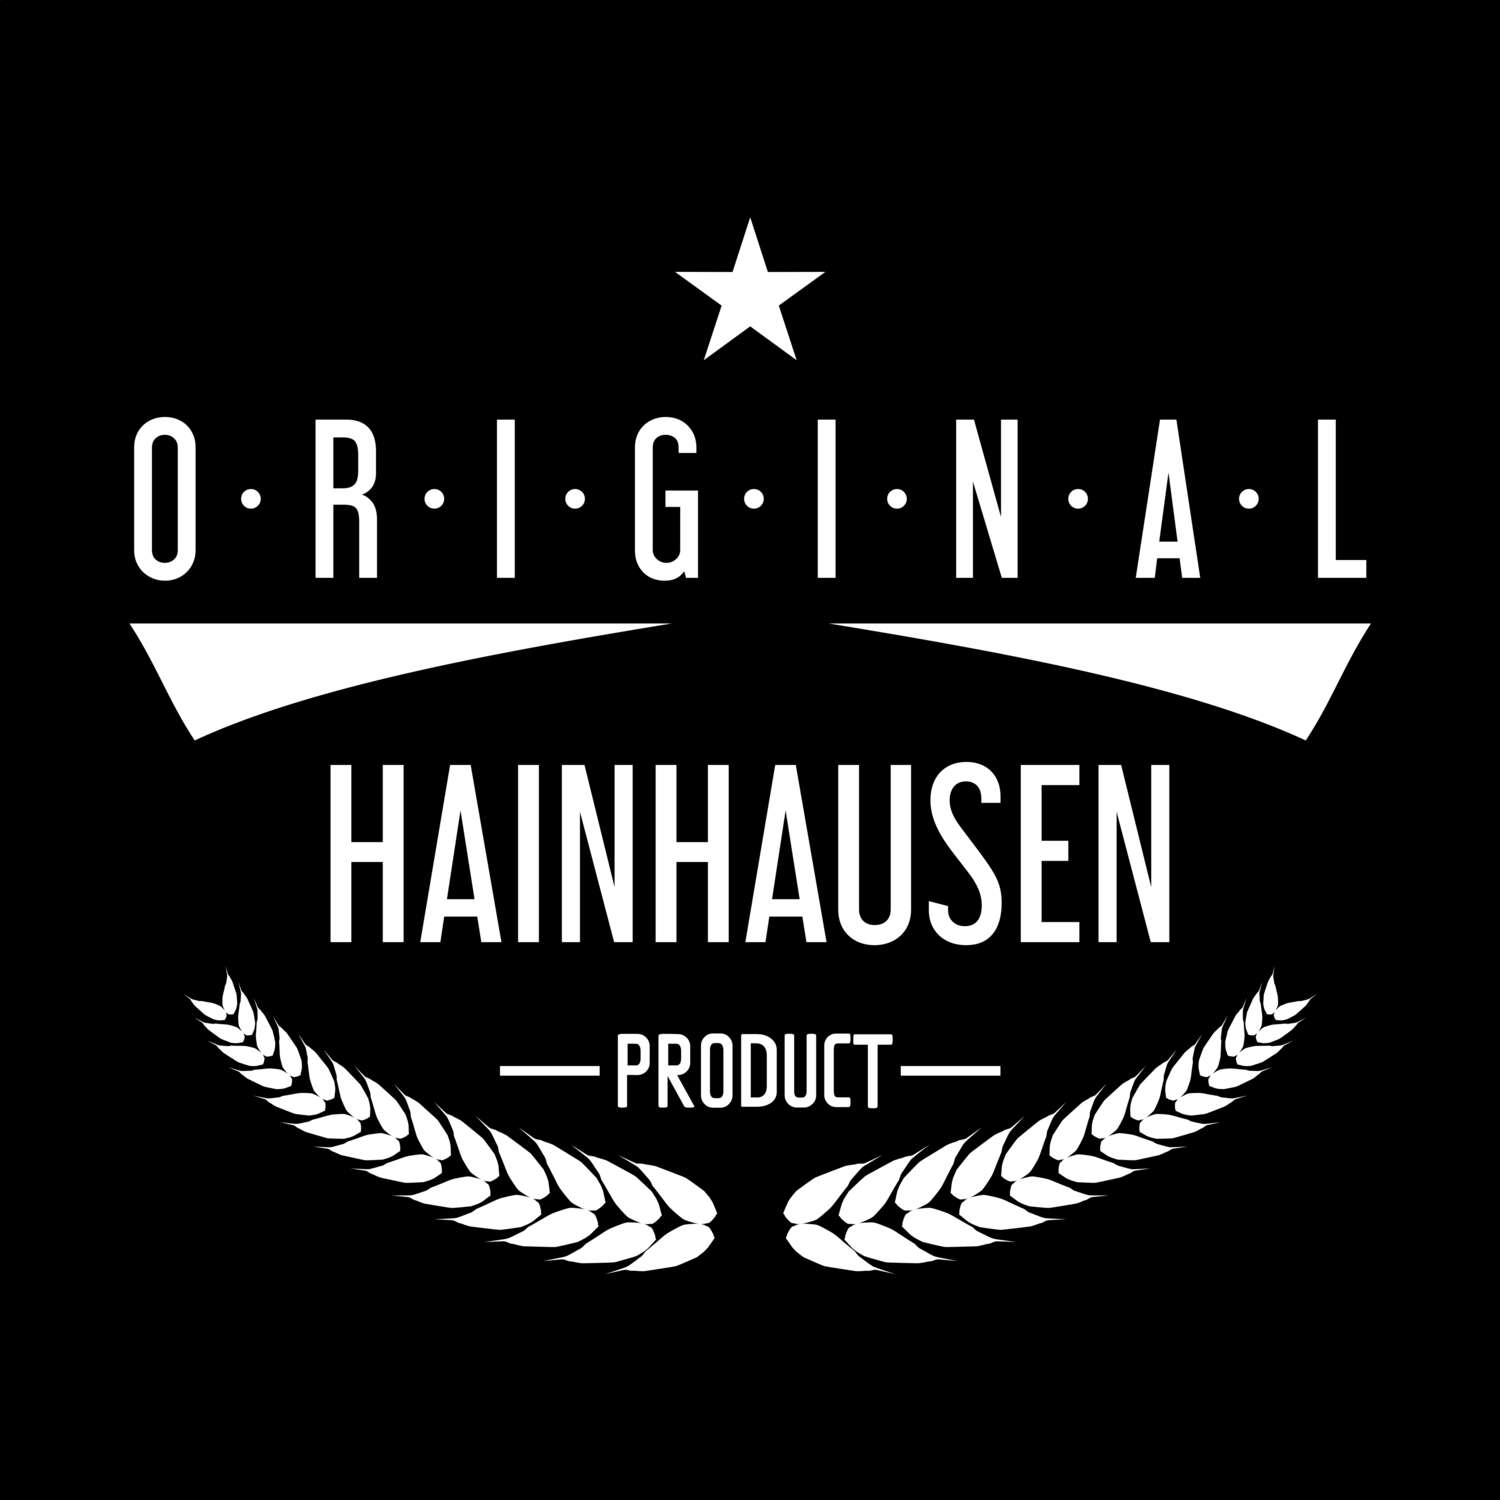 Hainhausen T-Shirt »Original Product«